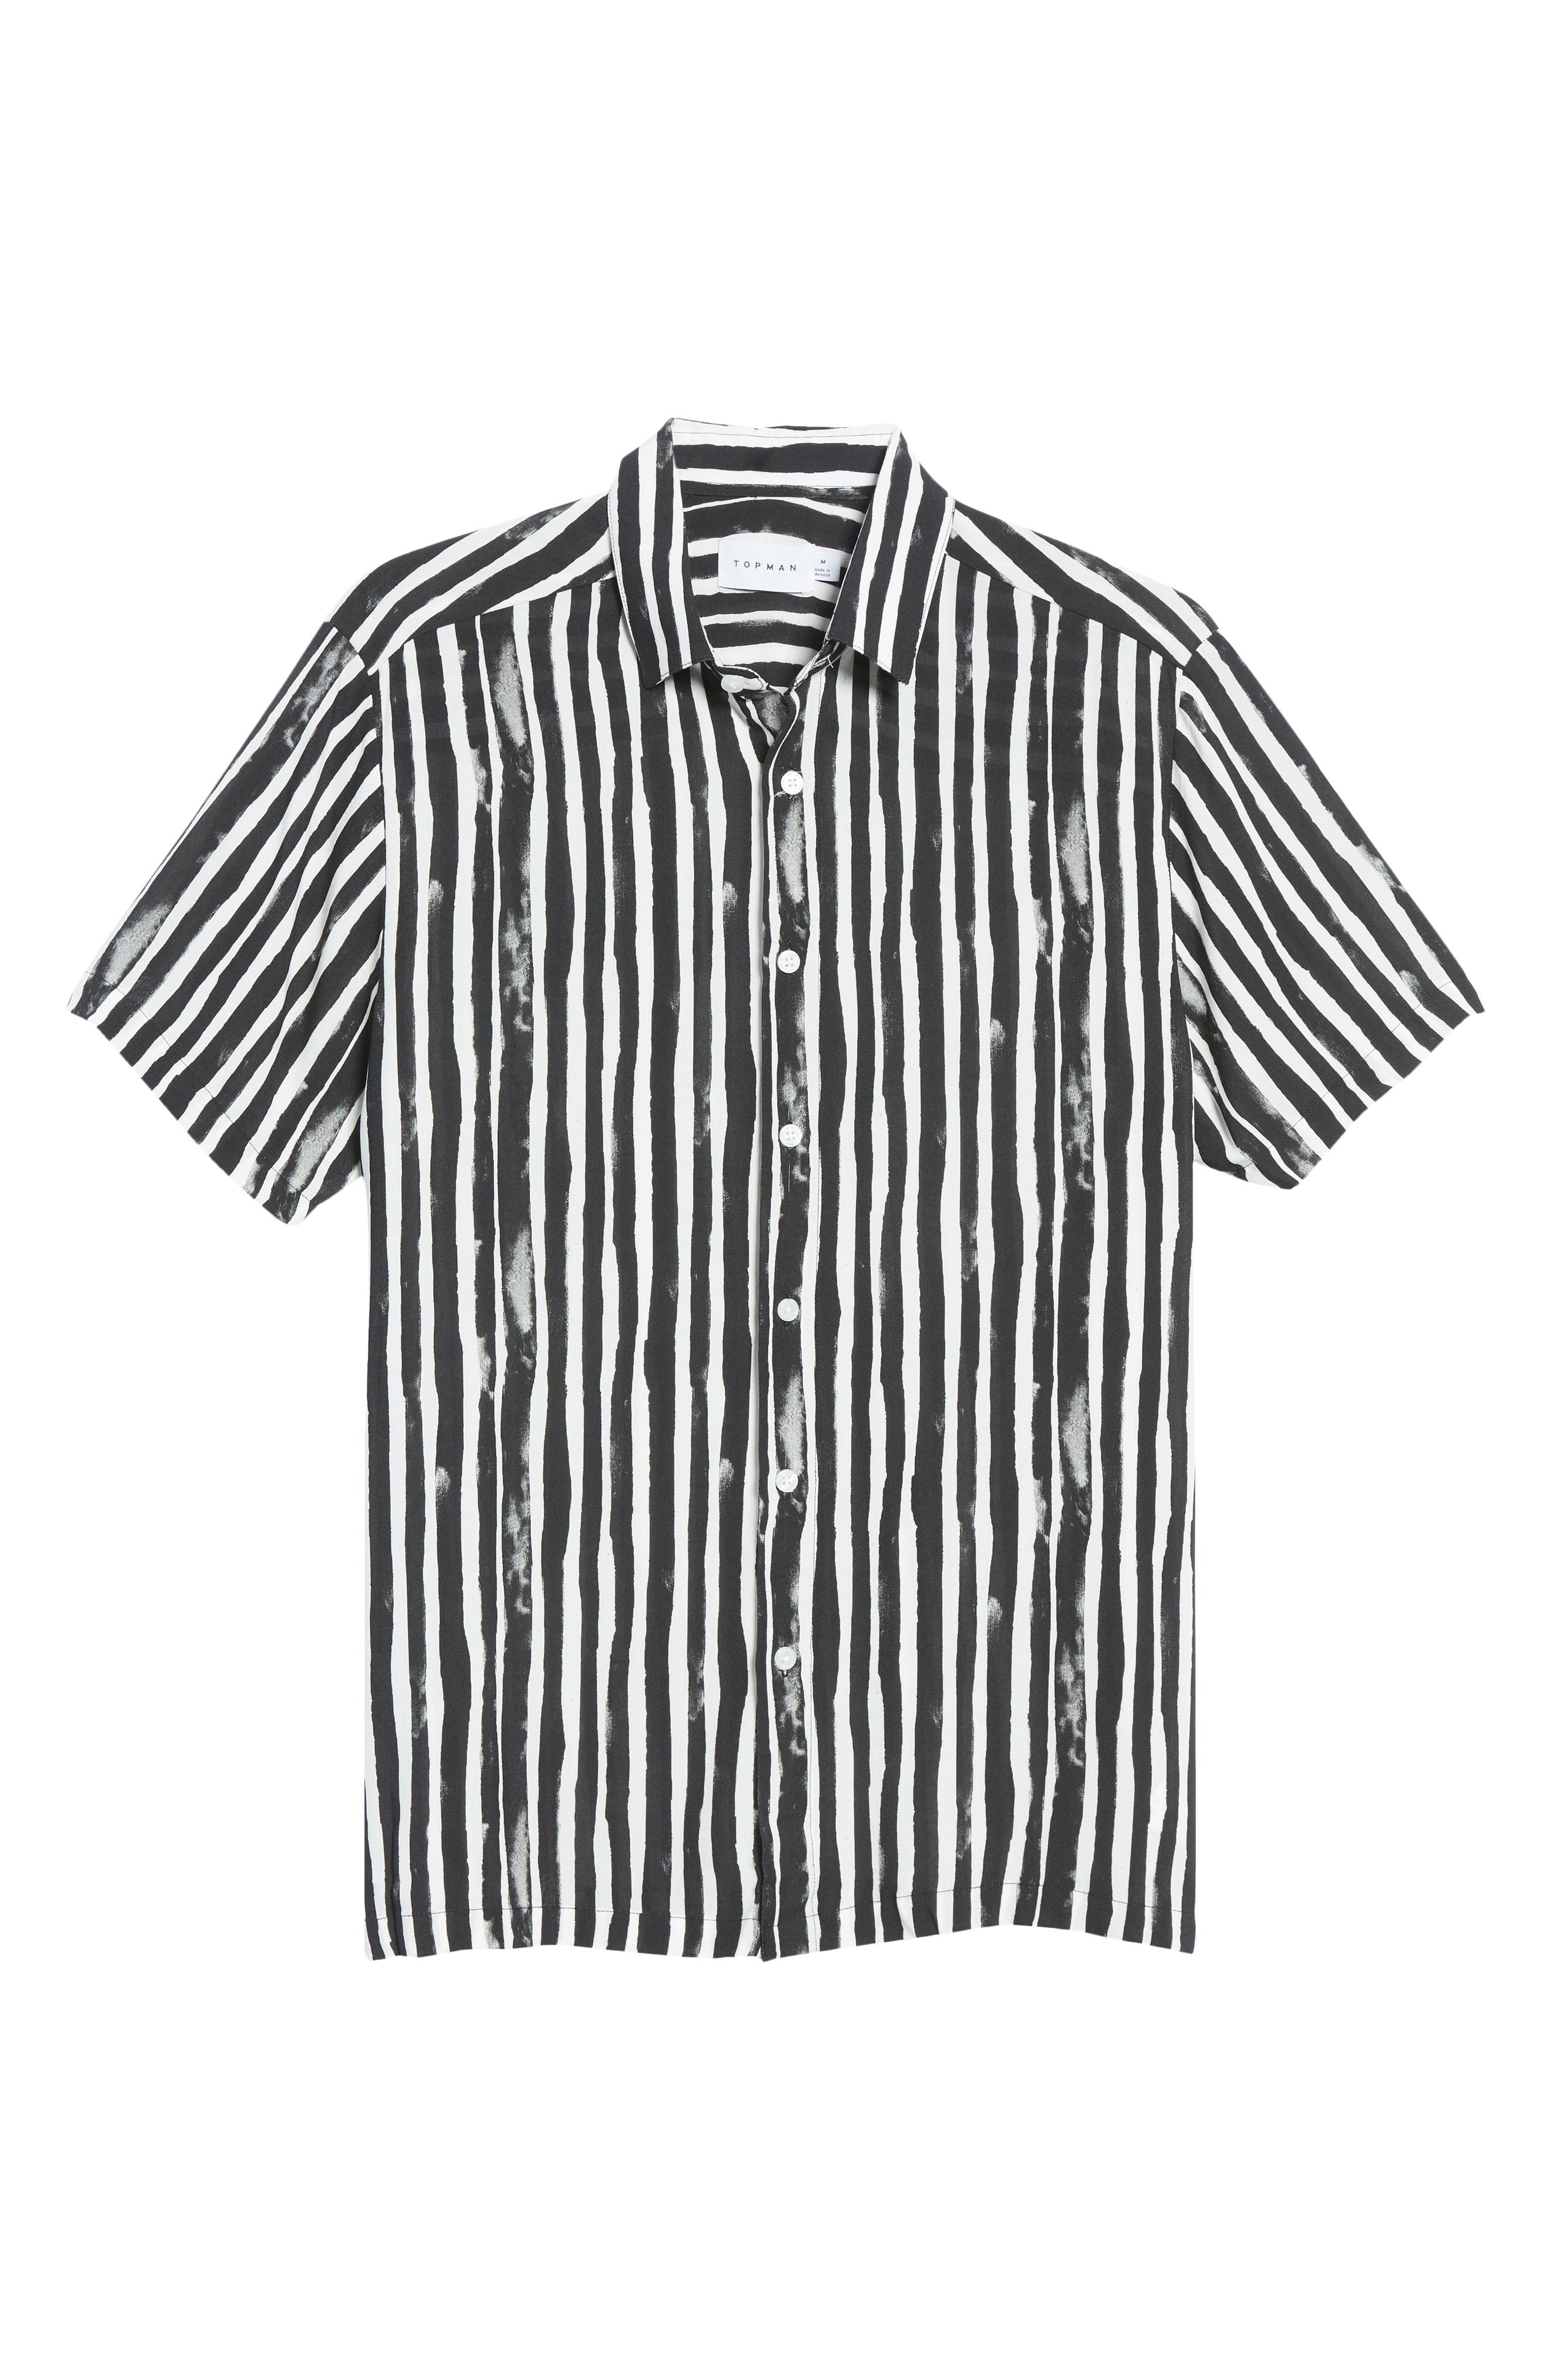 Topman Watercolor Stripe Short Sleeve Button Up Shirt, $45 | Nordstrom ...